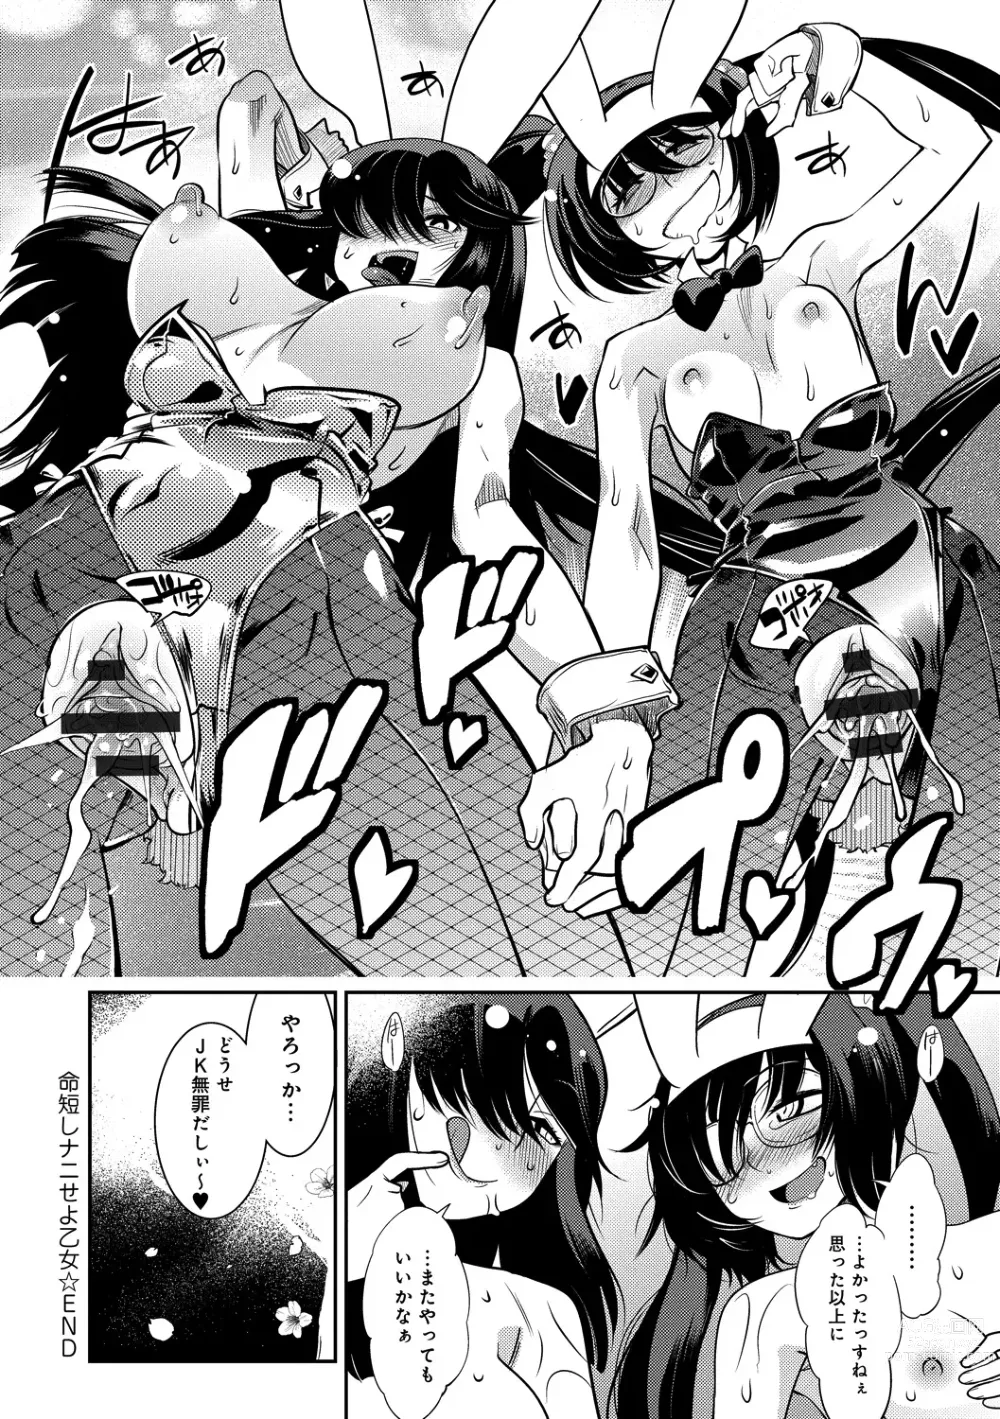 Page 228 of manga Hamekko 3Peace!!!